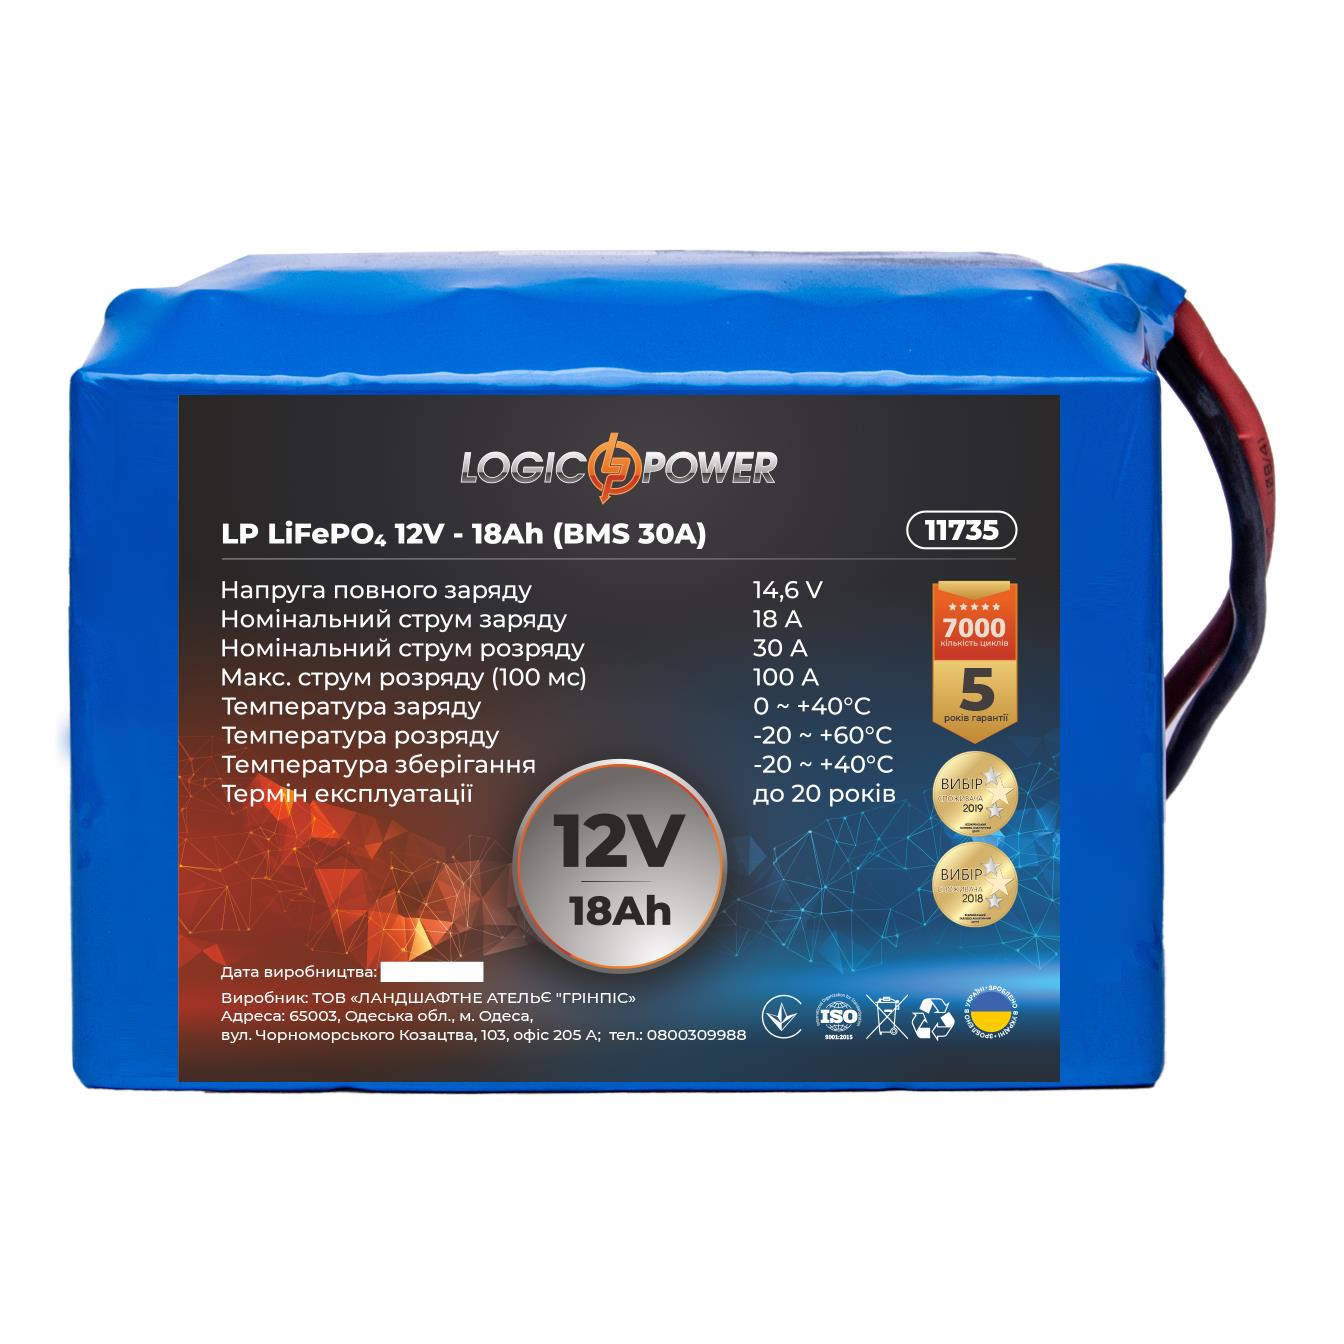 LogicPower LP LiFePO4 12V - 18 Ah (BMS 30A) (11735)